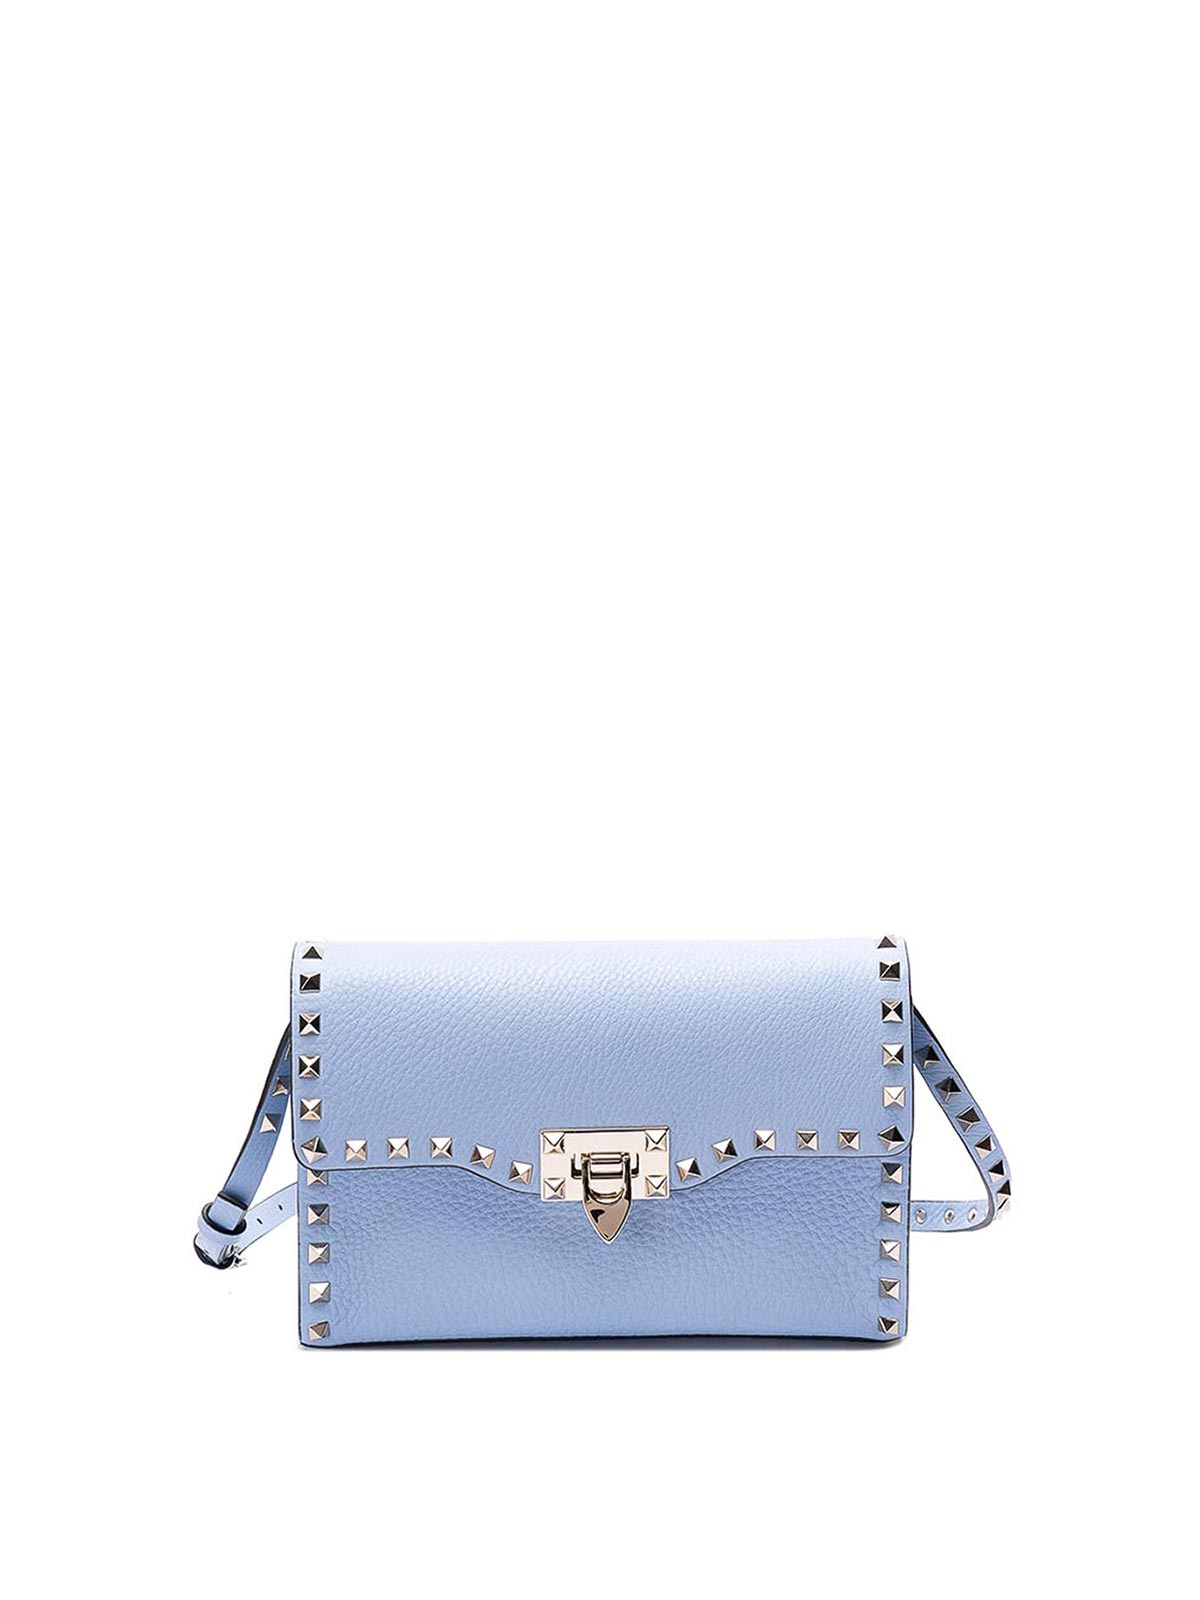 Valentino Garavani Rockstud Small Shoulder Bag In Blue